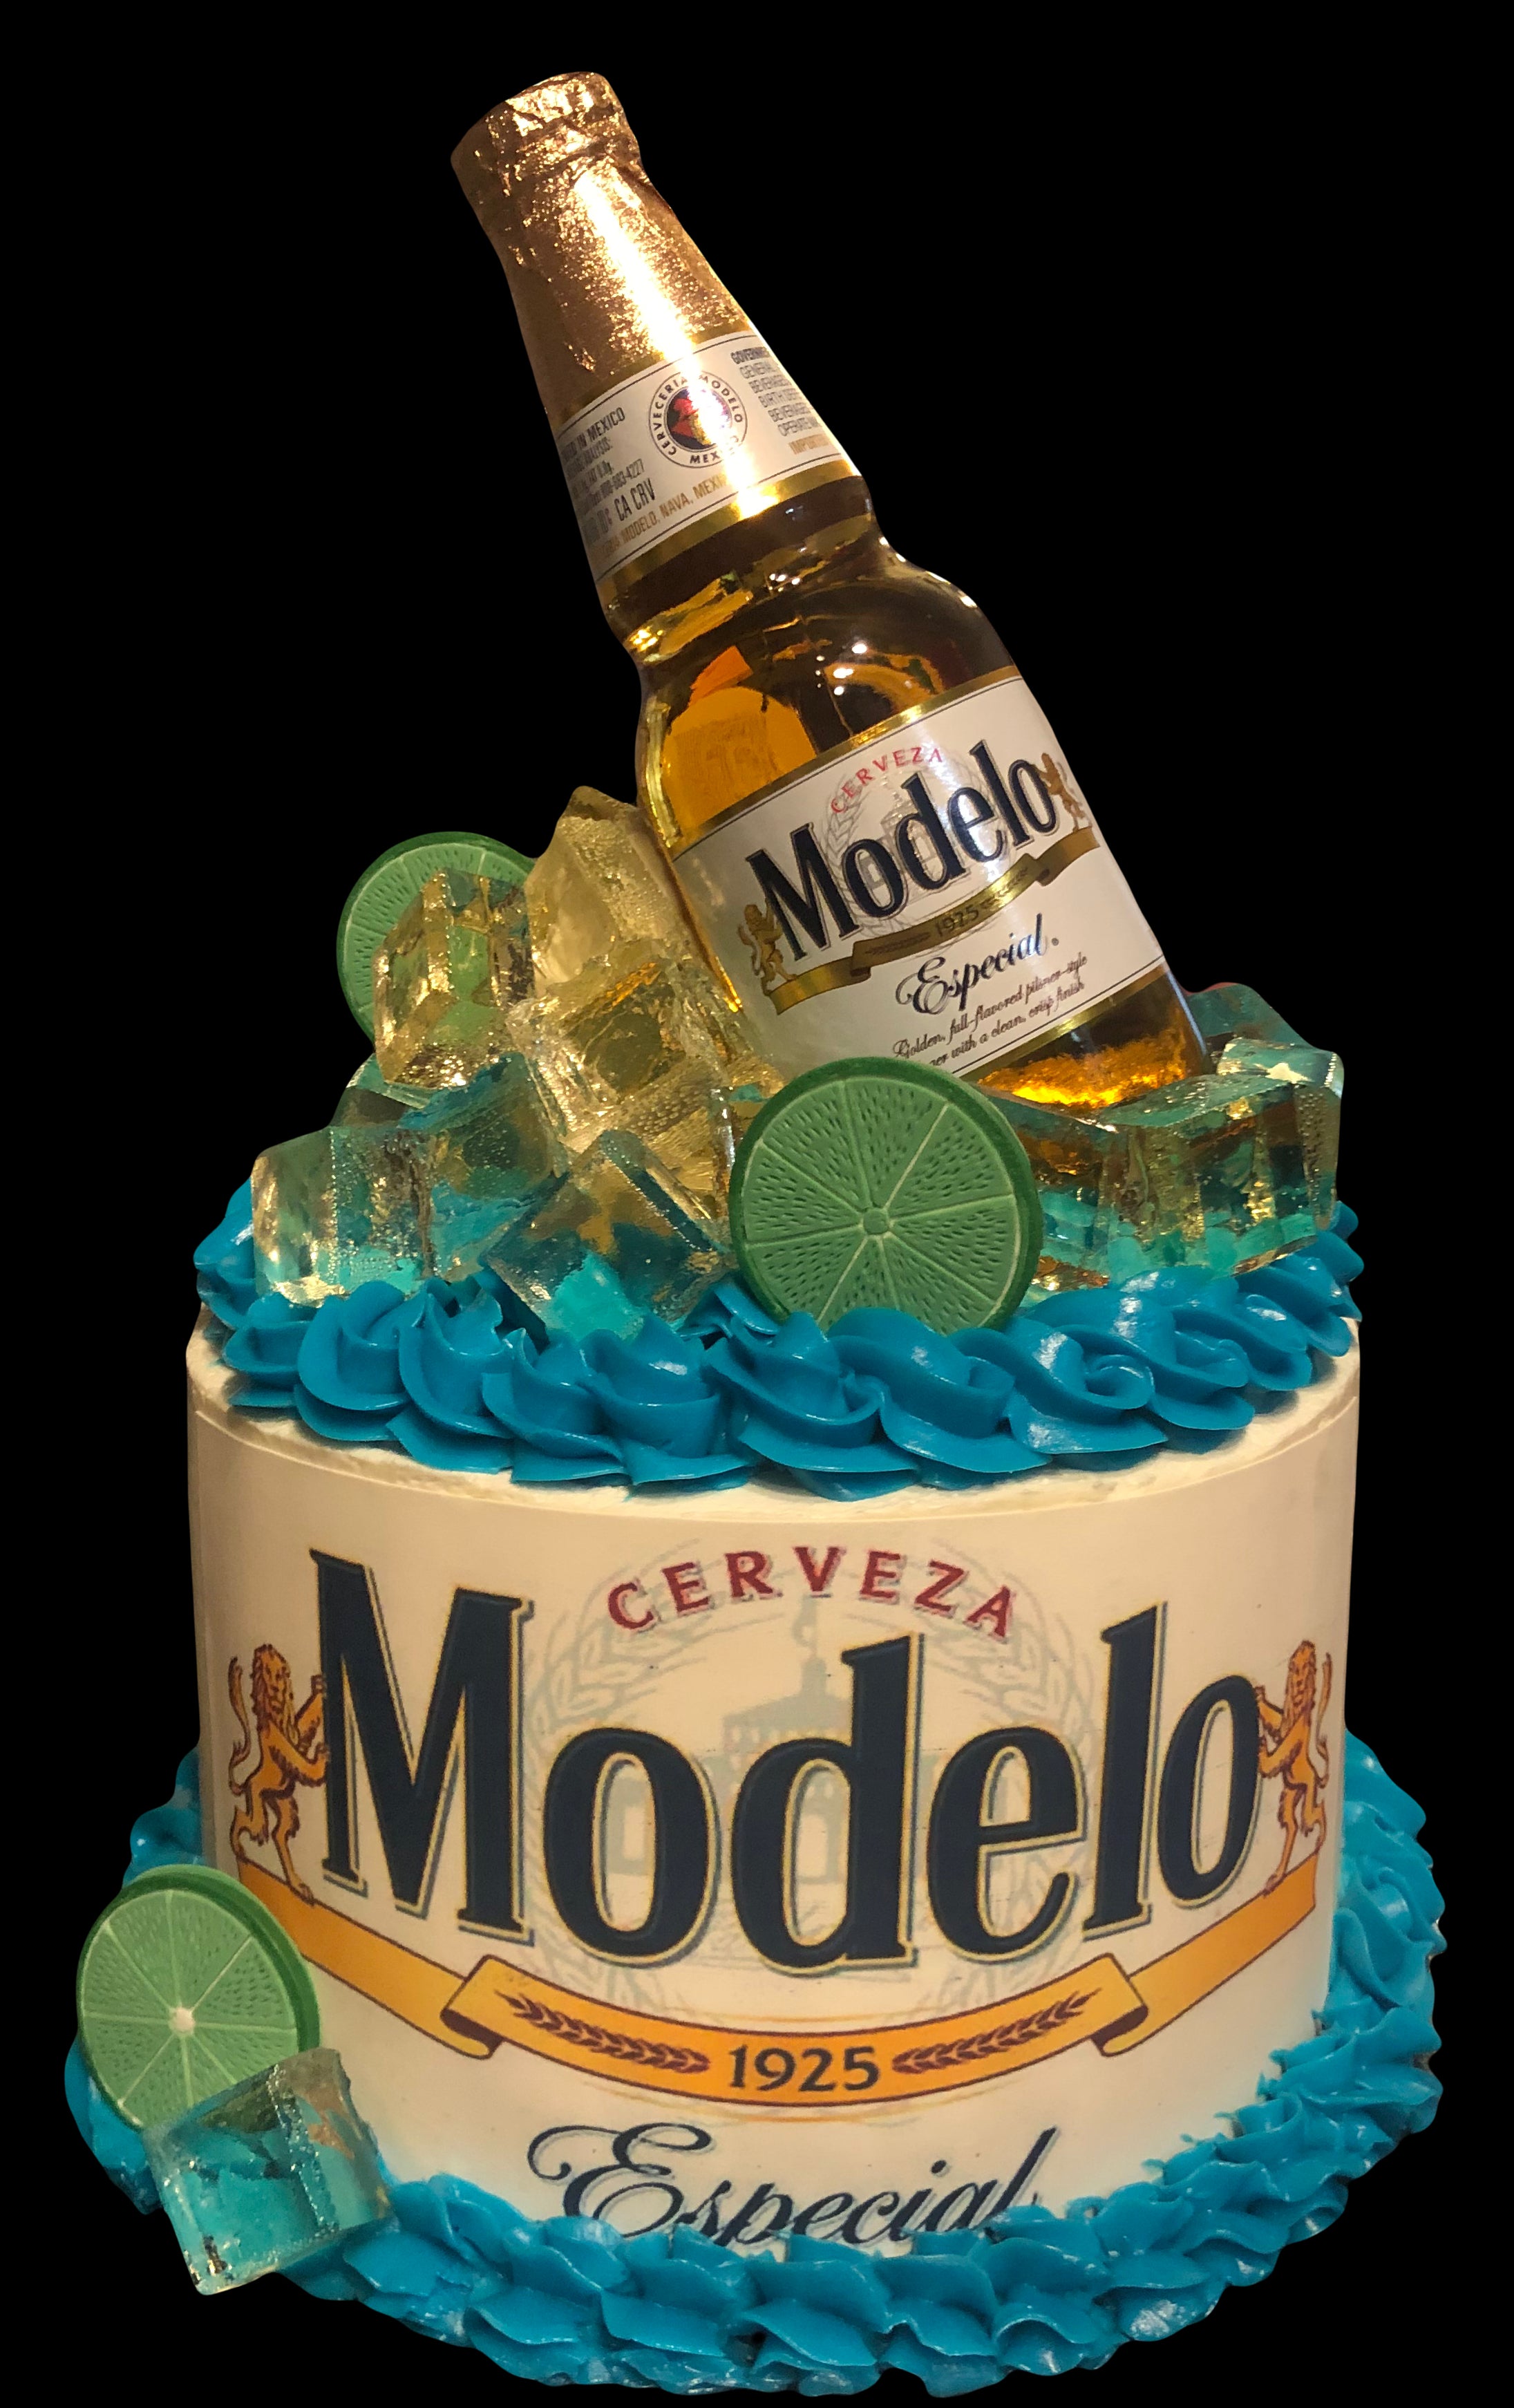 Modelo beer cake - YouTube